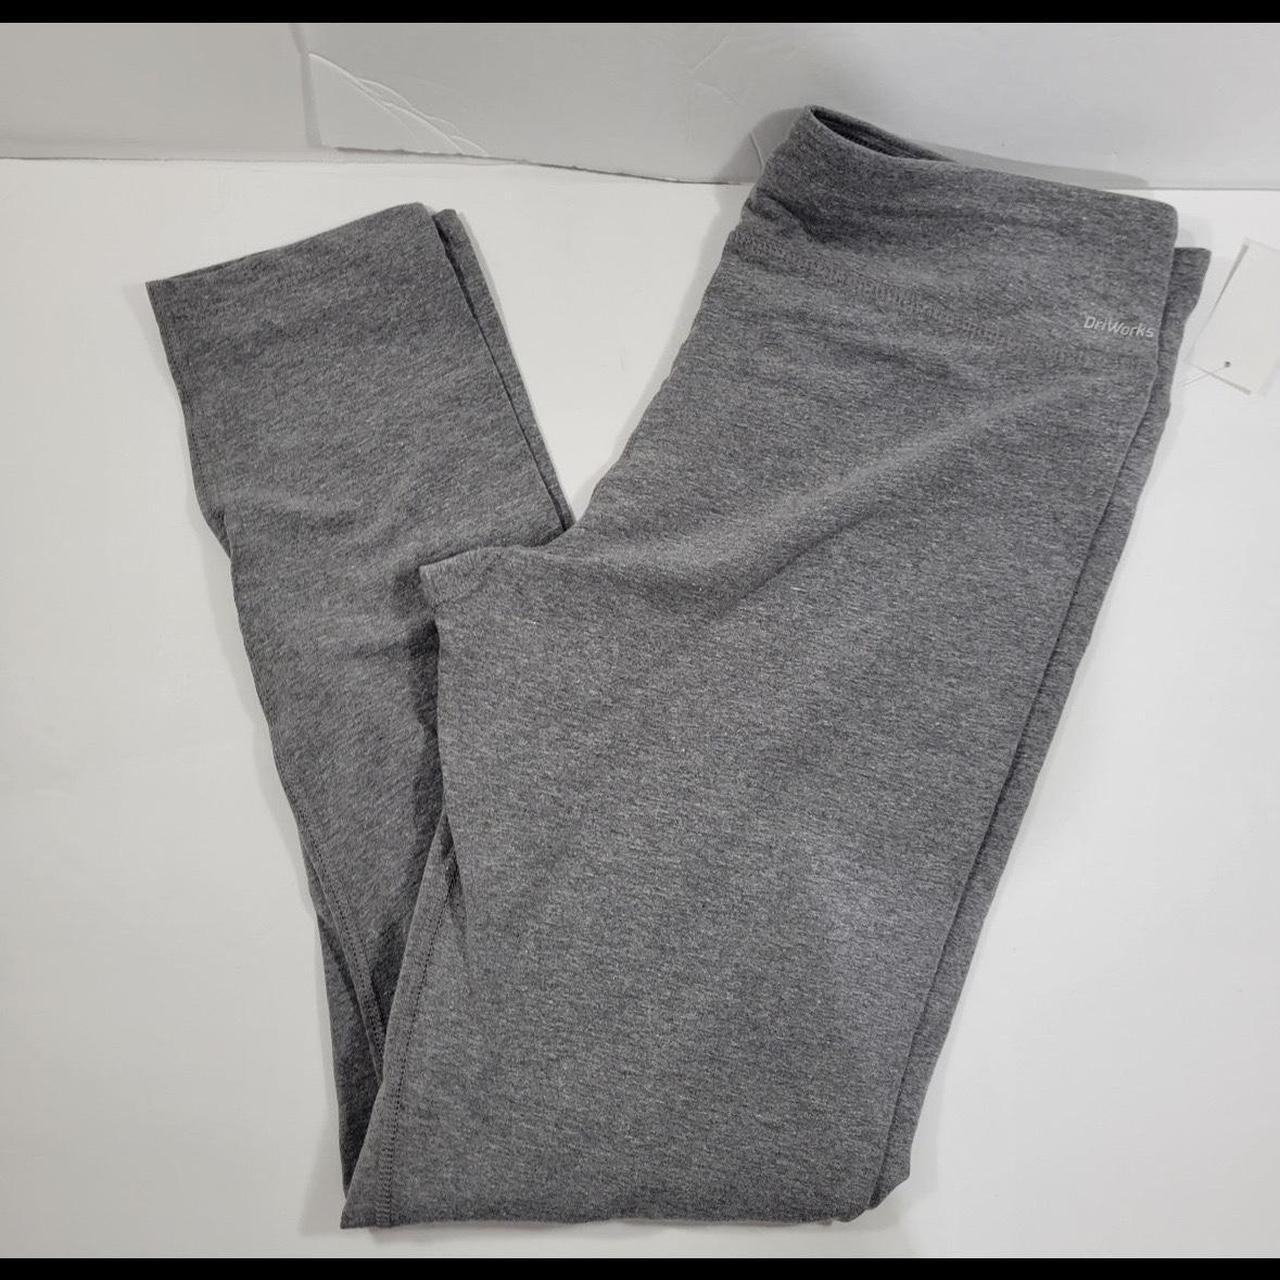 Athletic works leggings in shades of Grey with black - Depop